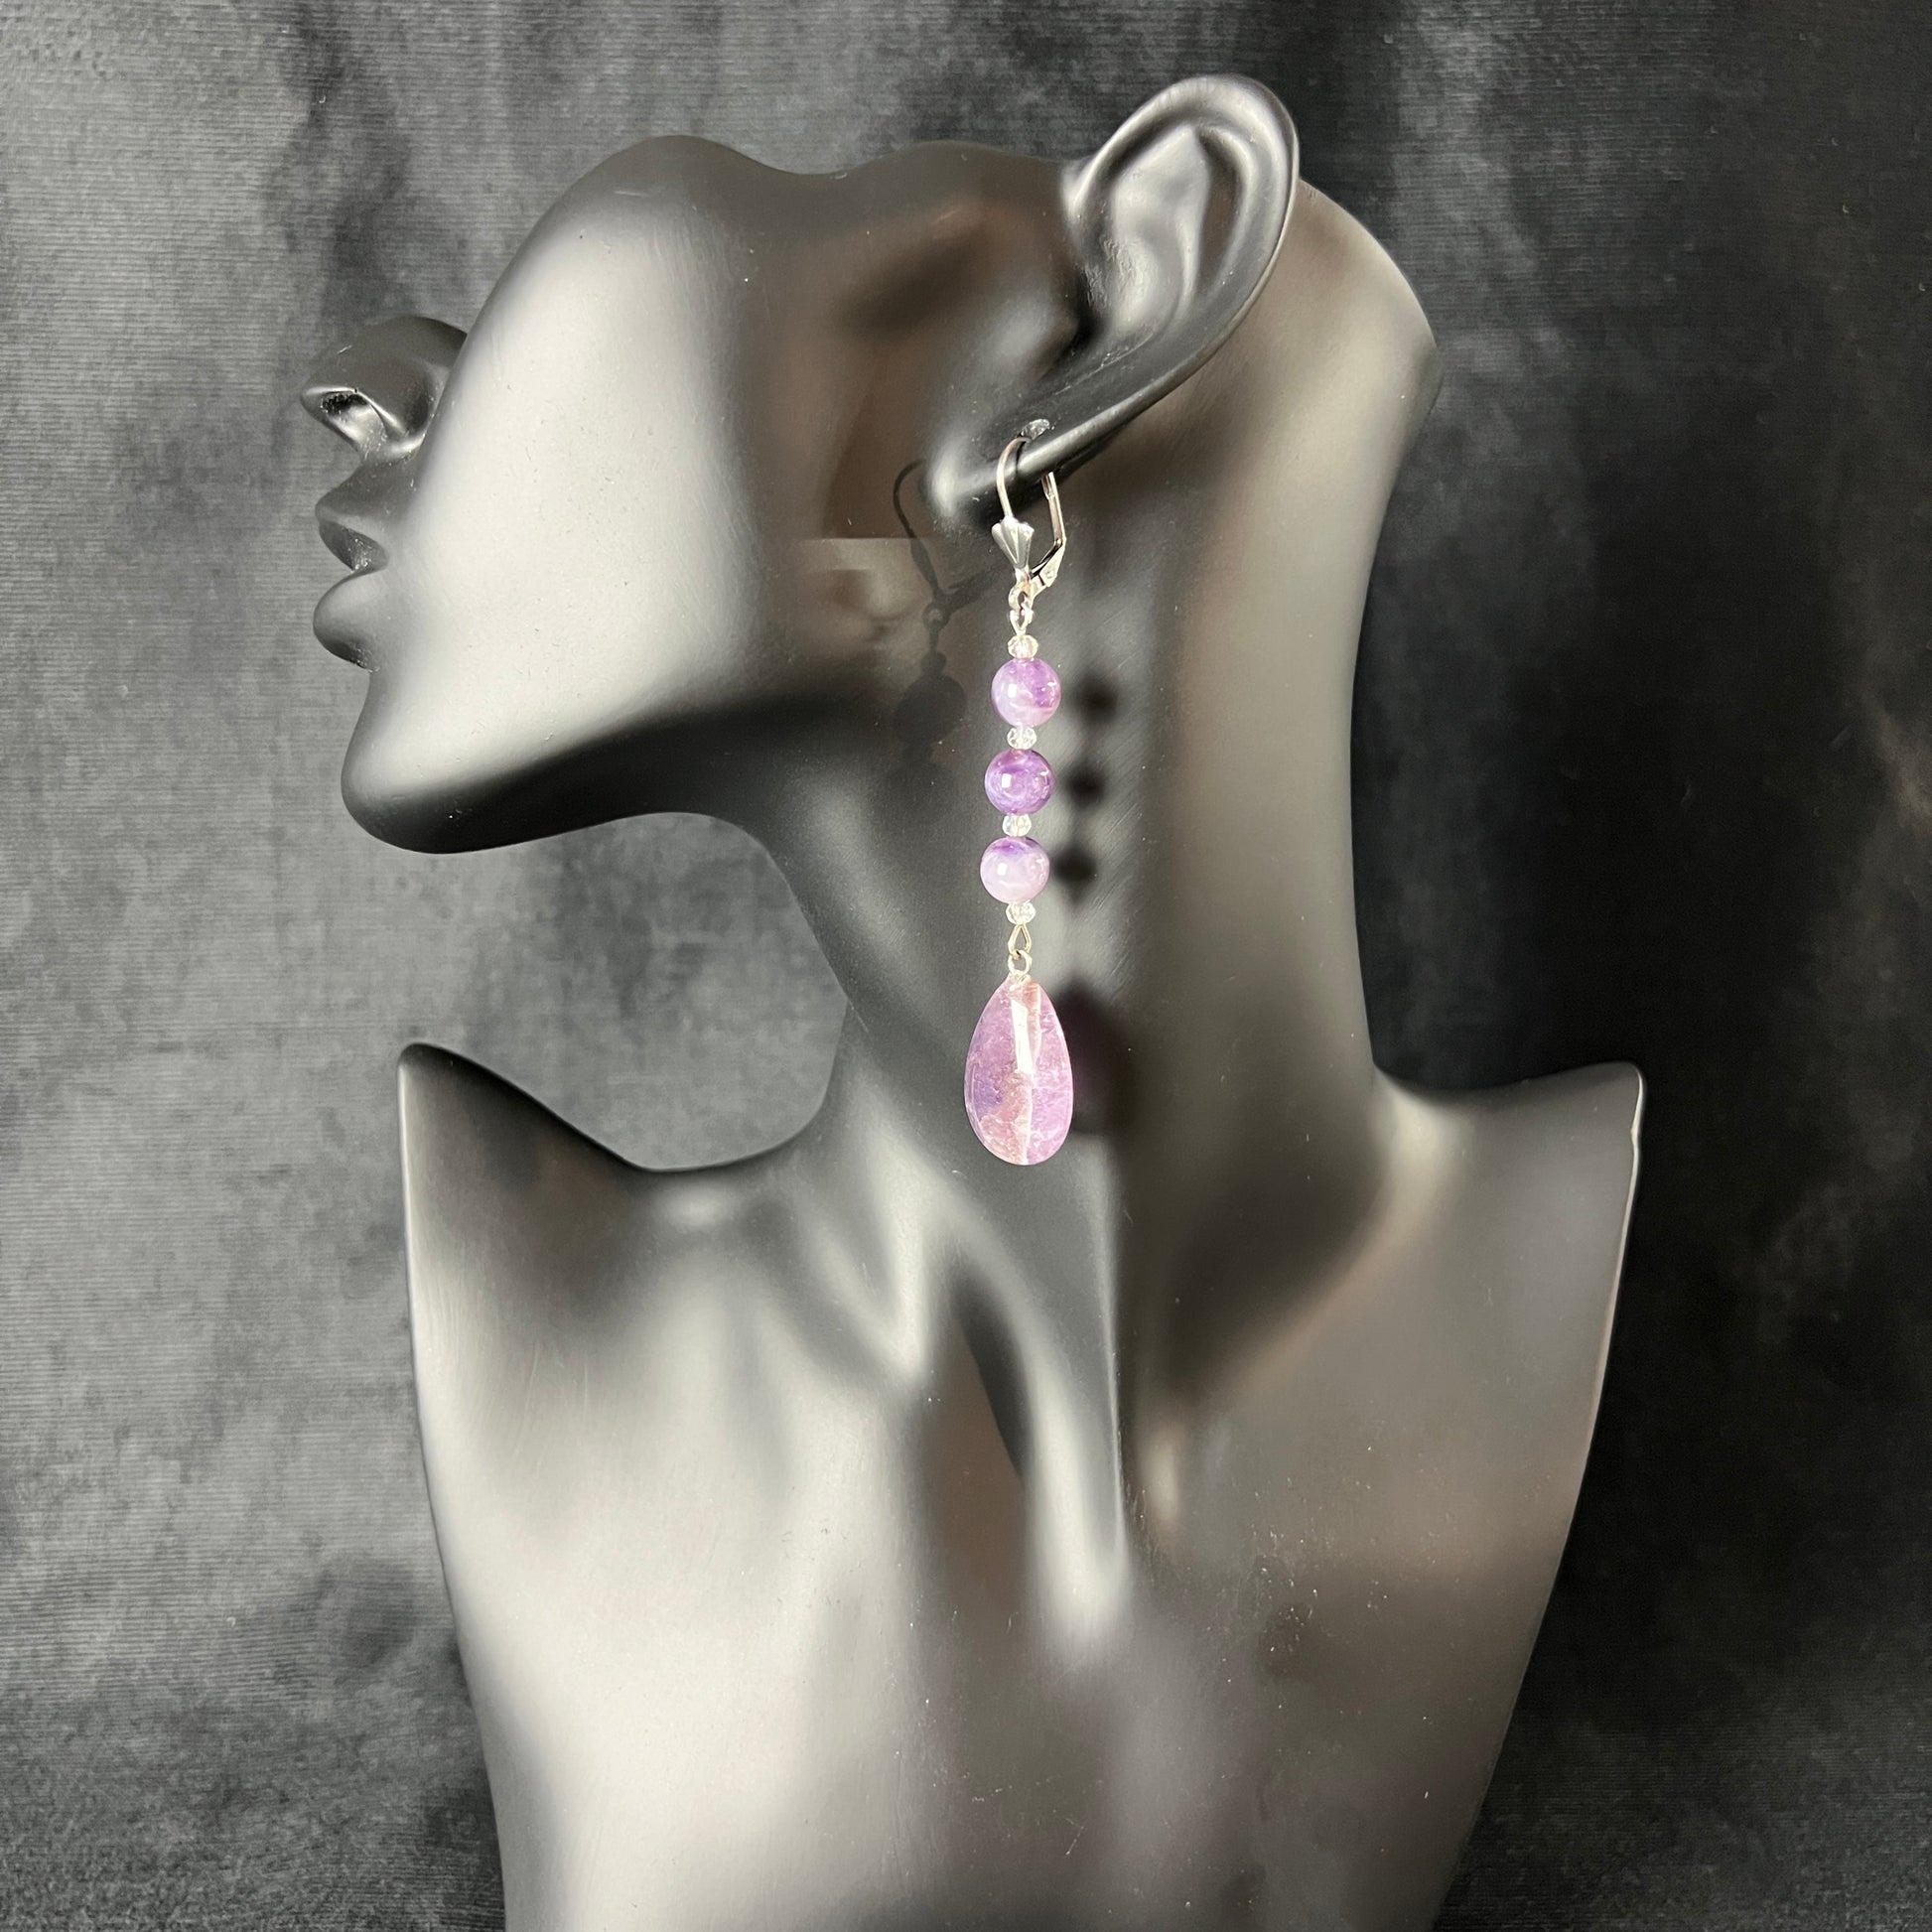 Amethyst and crystal earrings elegant art deco jewelry dainty earrings for her